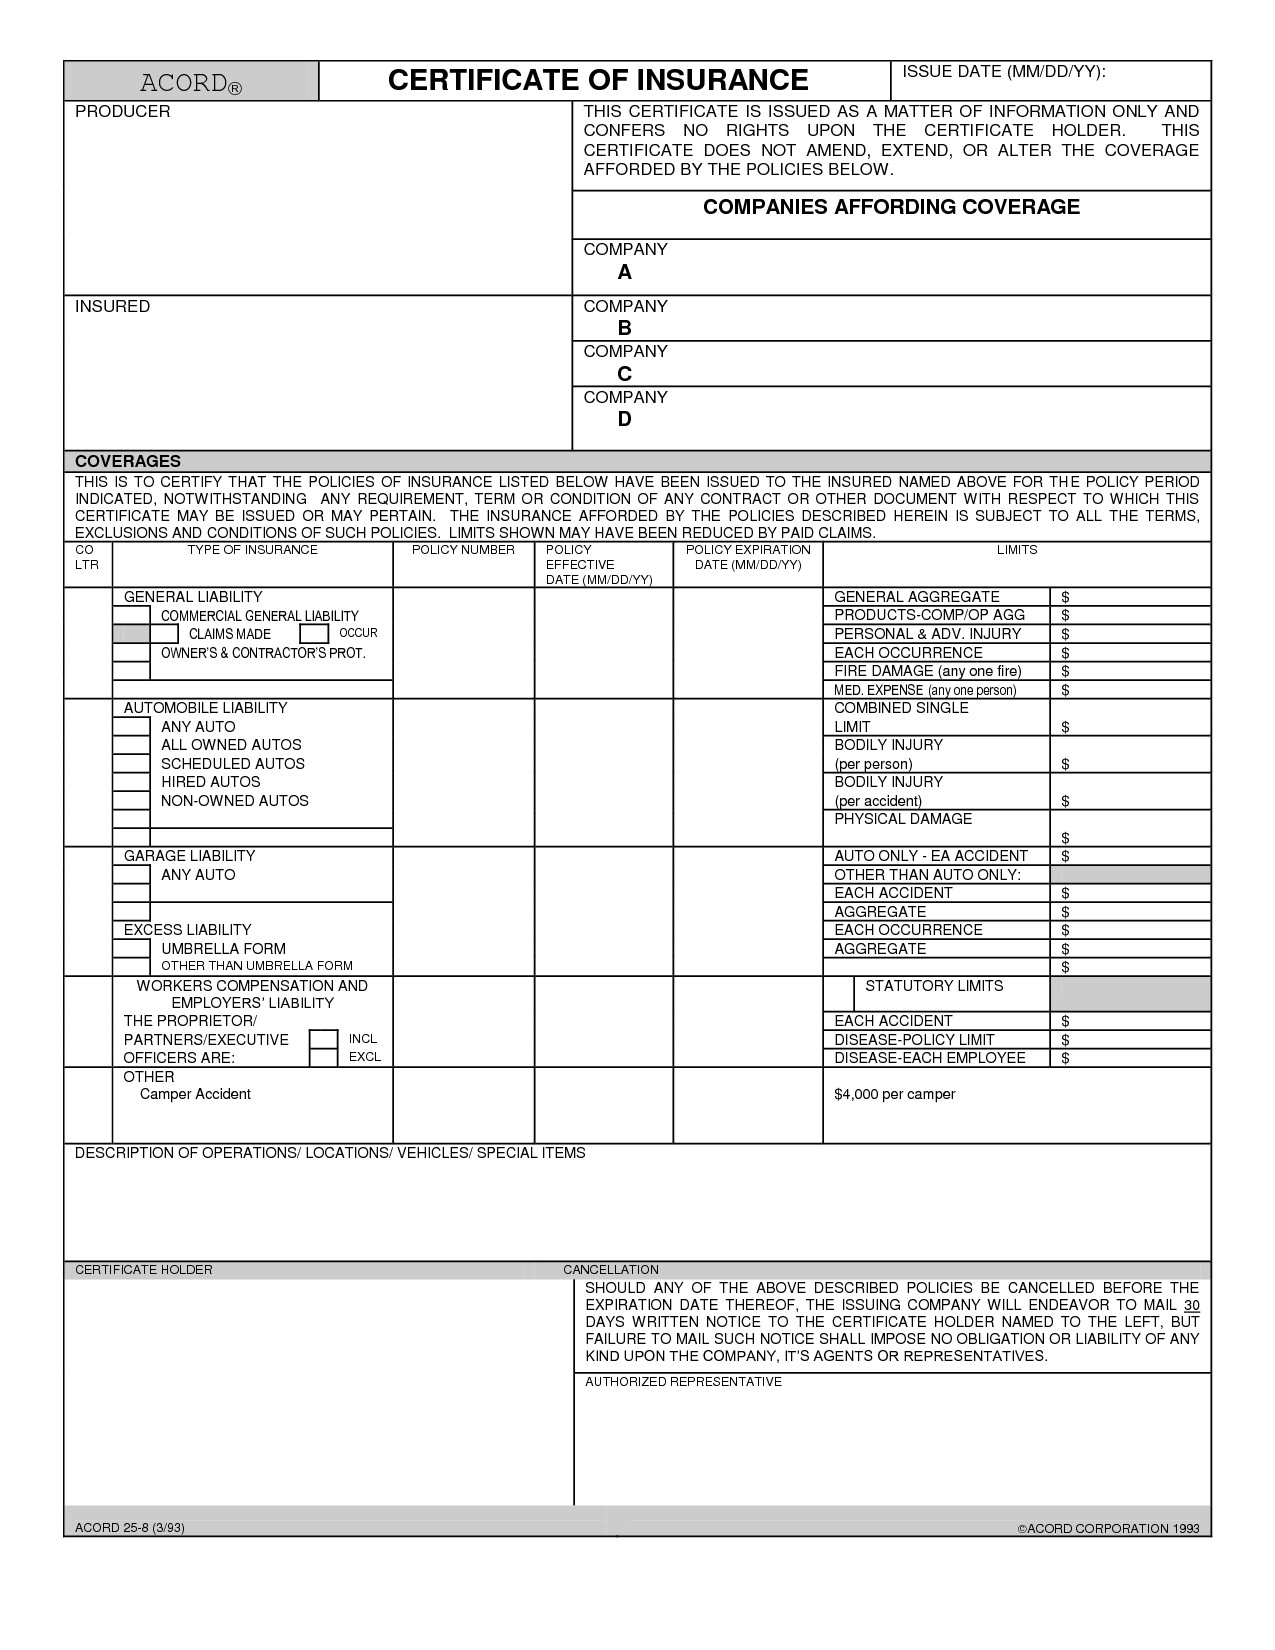 Blank Acord Certificate Insurance